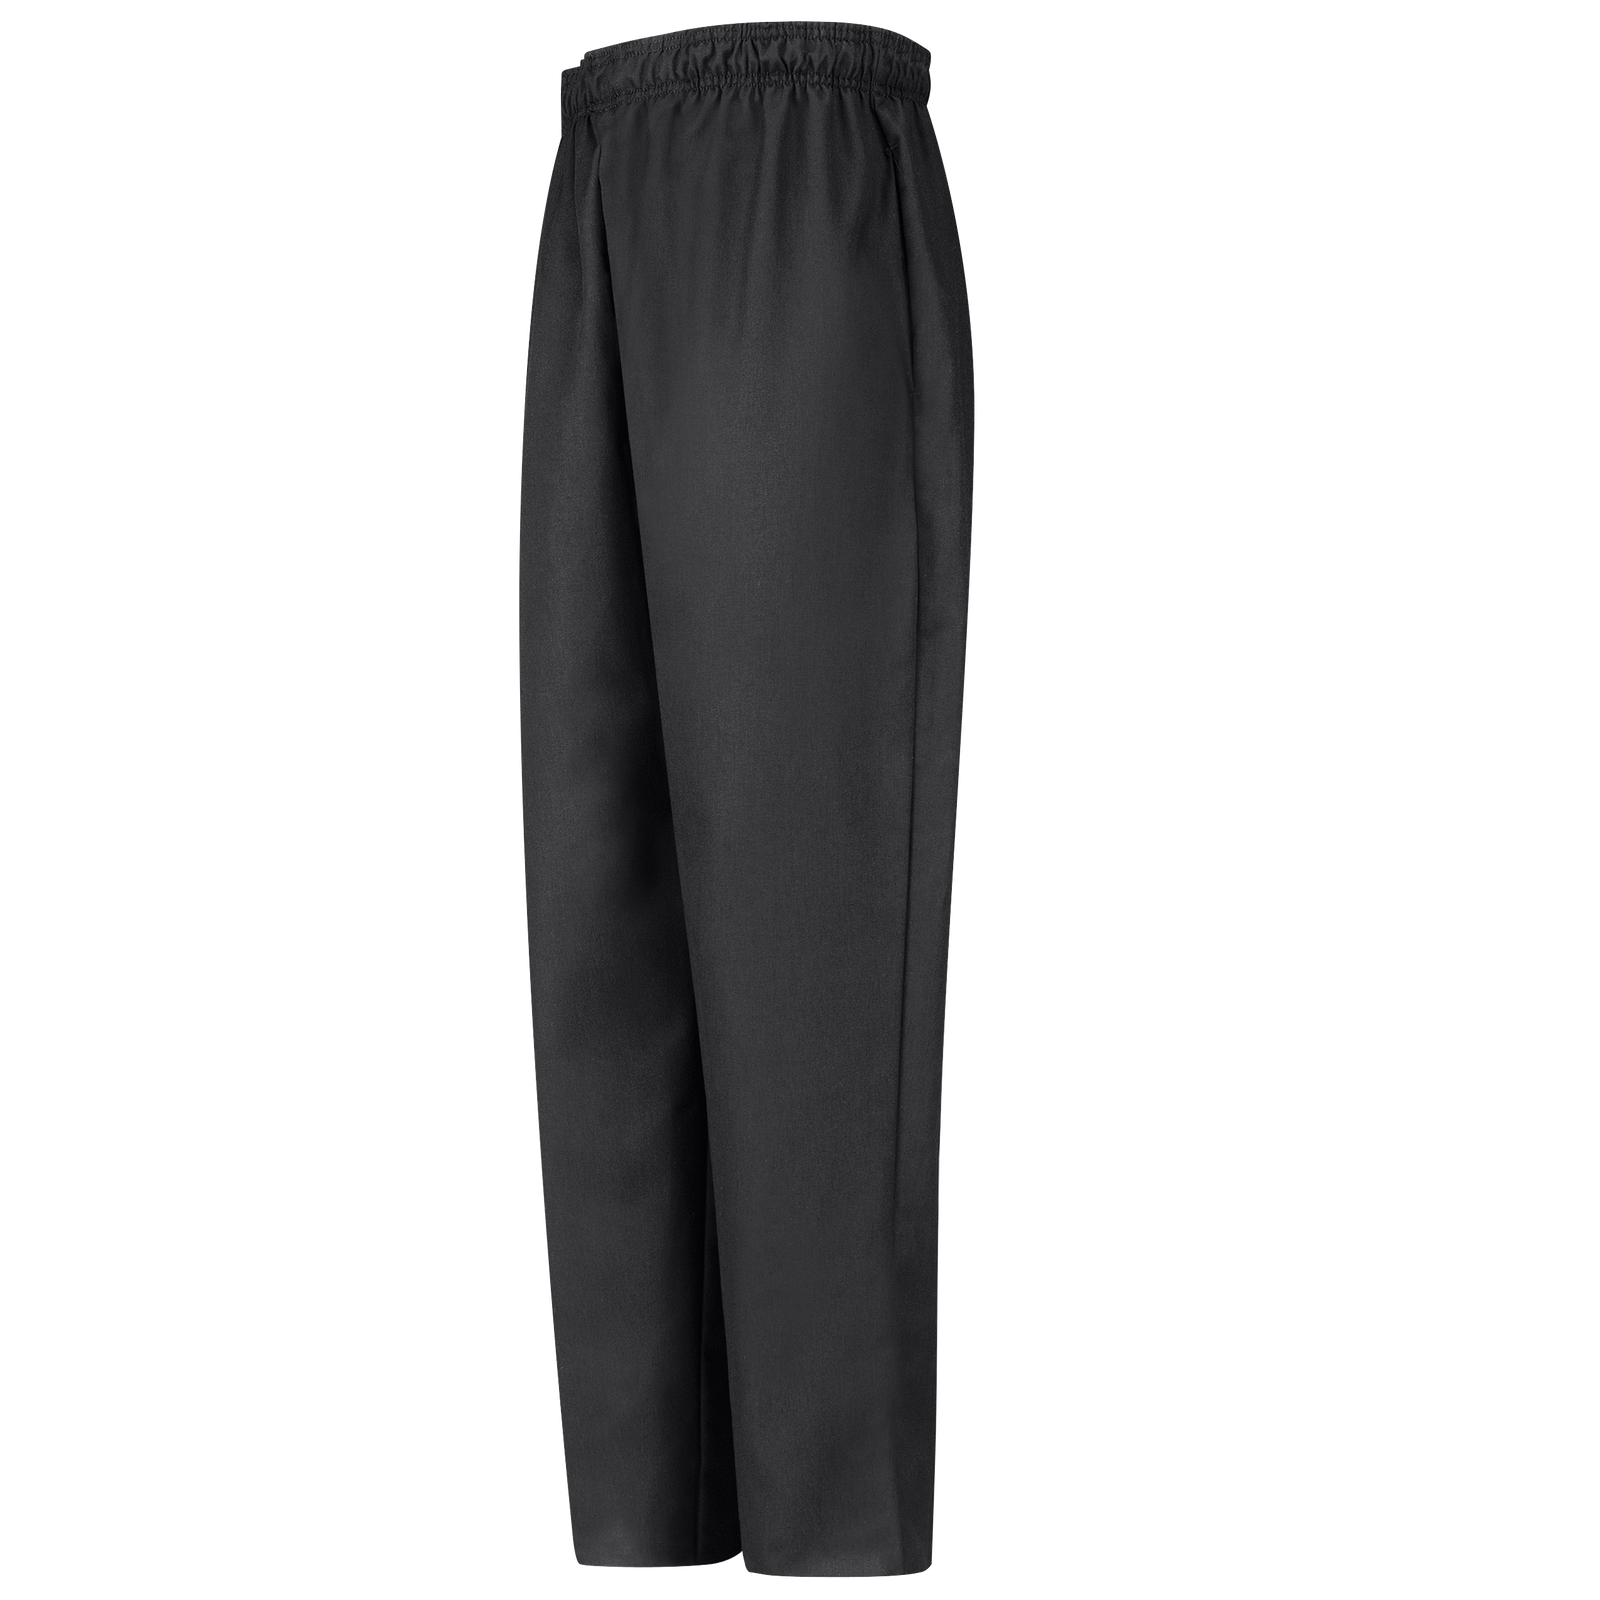 Chef Uniforms CU Unisex Elastic Black Polka Dot Uniform Relaxed Pants NWT Large 